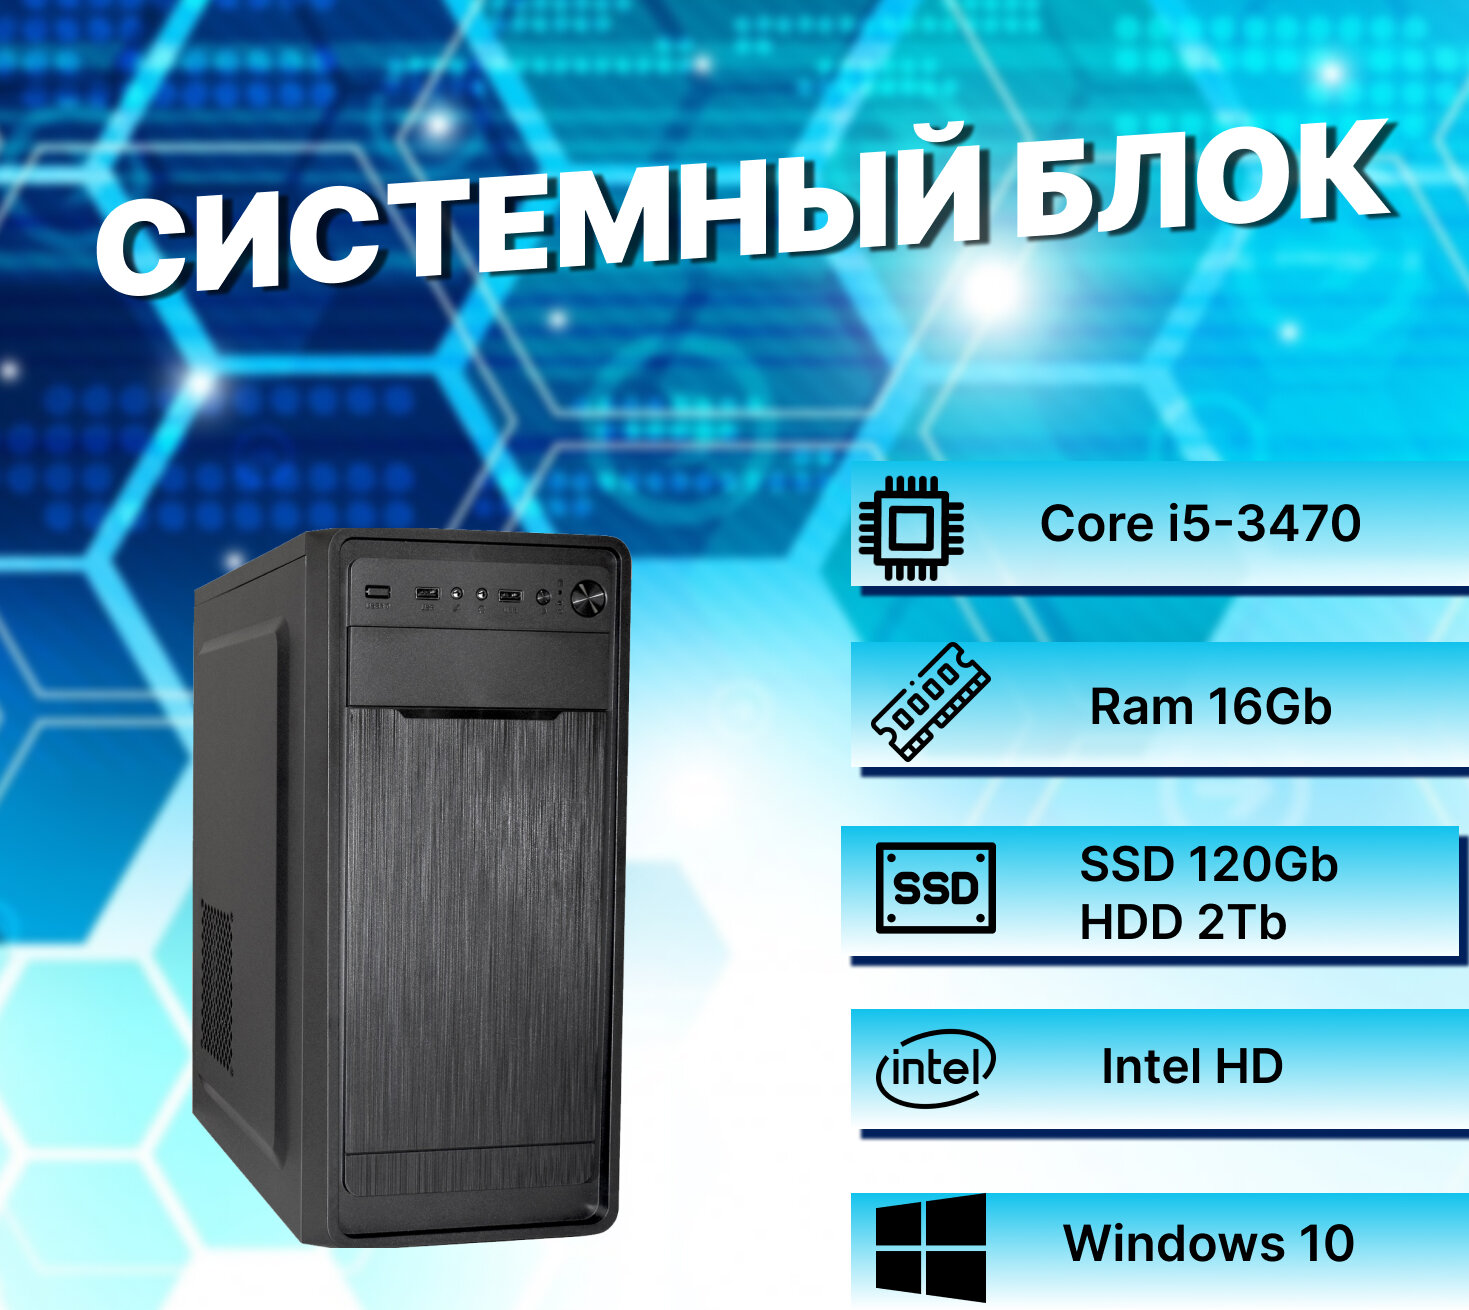 Системный блок Intel Core I5-3470 (3.2ГГц)/ RAM 16Gb/ SSD 120Gb/ HDD 2Tb/ Intel HD/ Windows 10 Pro